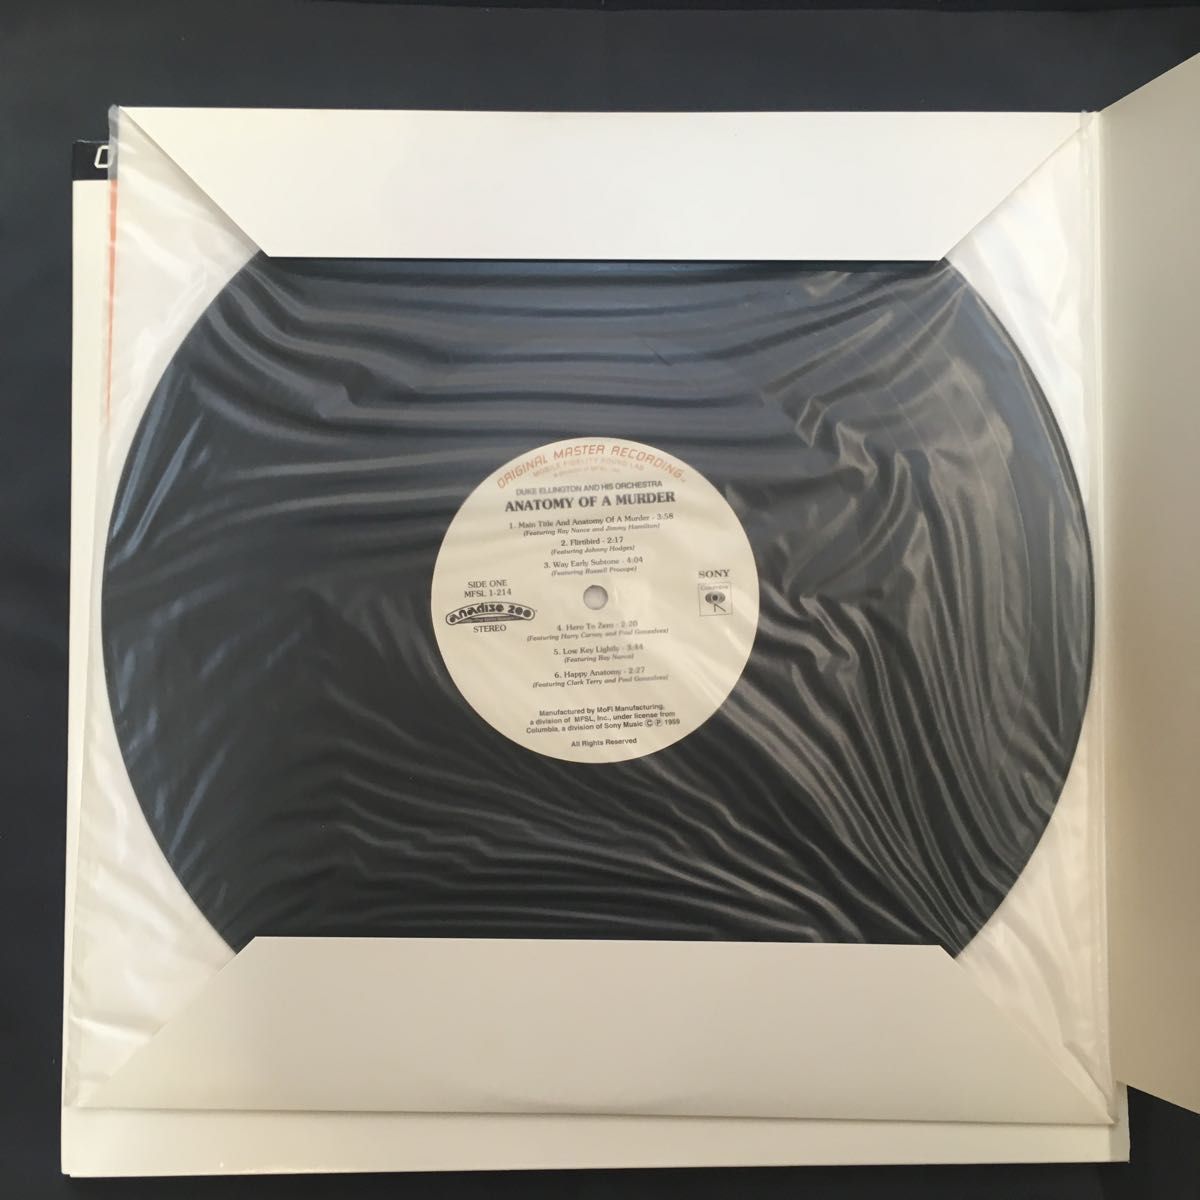 MUSIC BY DUKE ELLINGTON from THE SOUND TRACK LPレコード 200g US重量盤